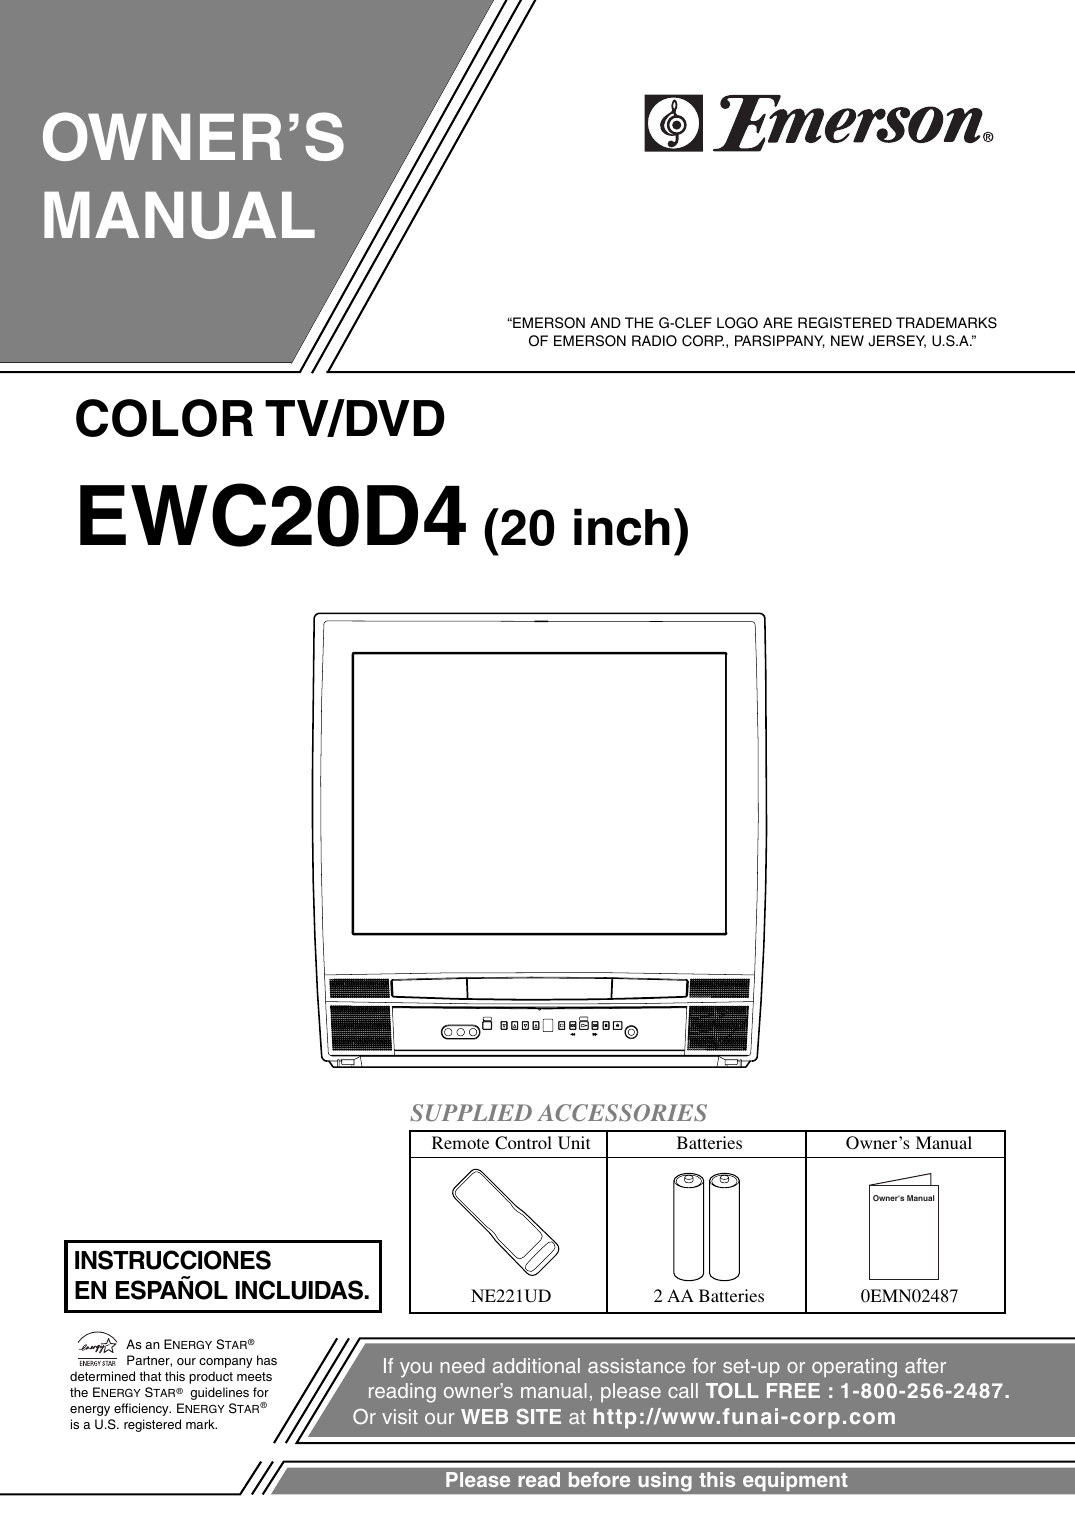 Emerson Ewc20D4 Owners Manual T9004UE.QX33